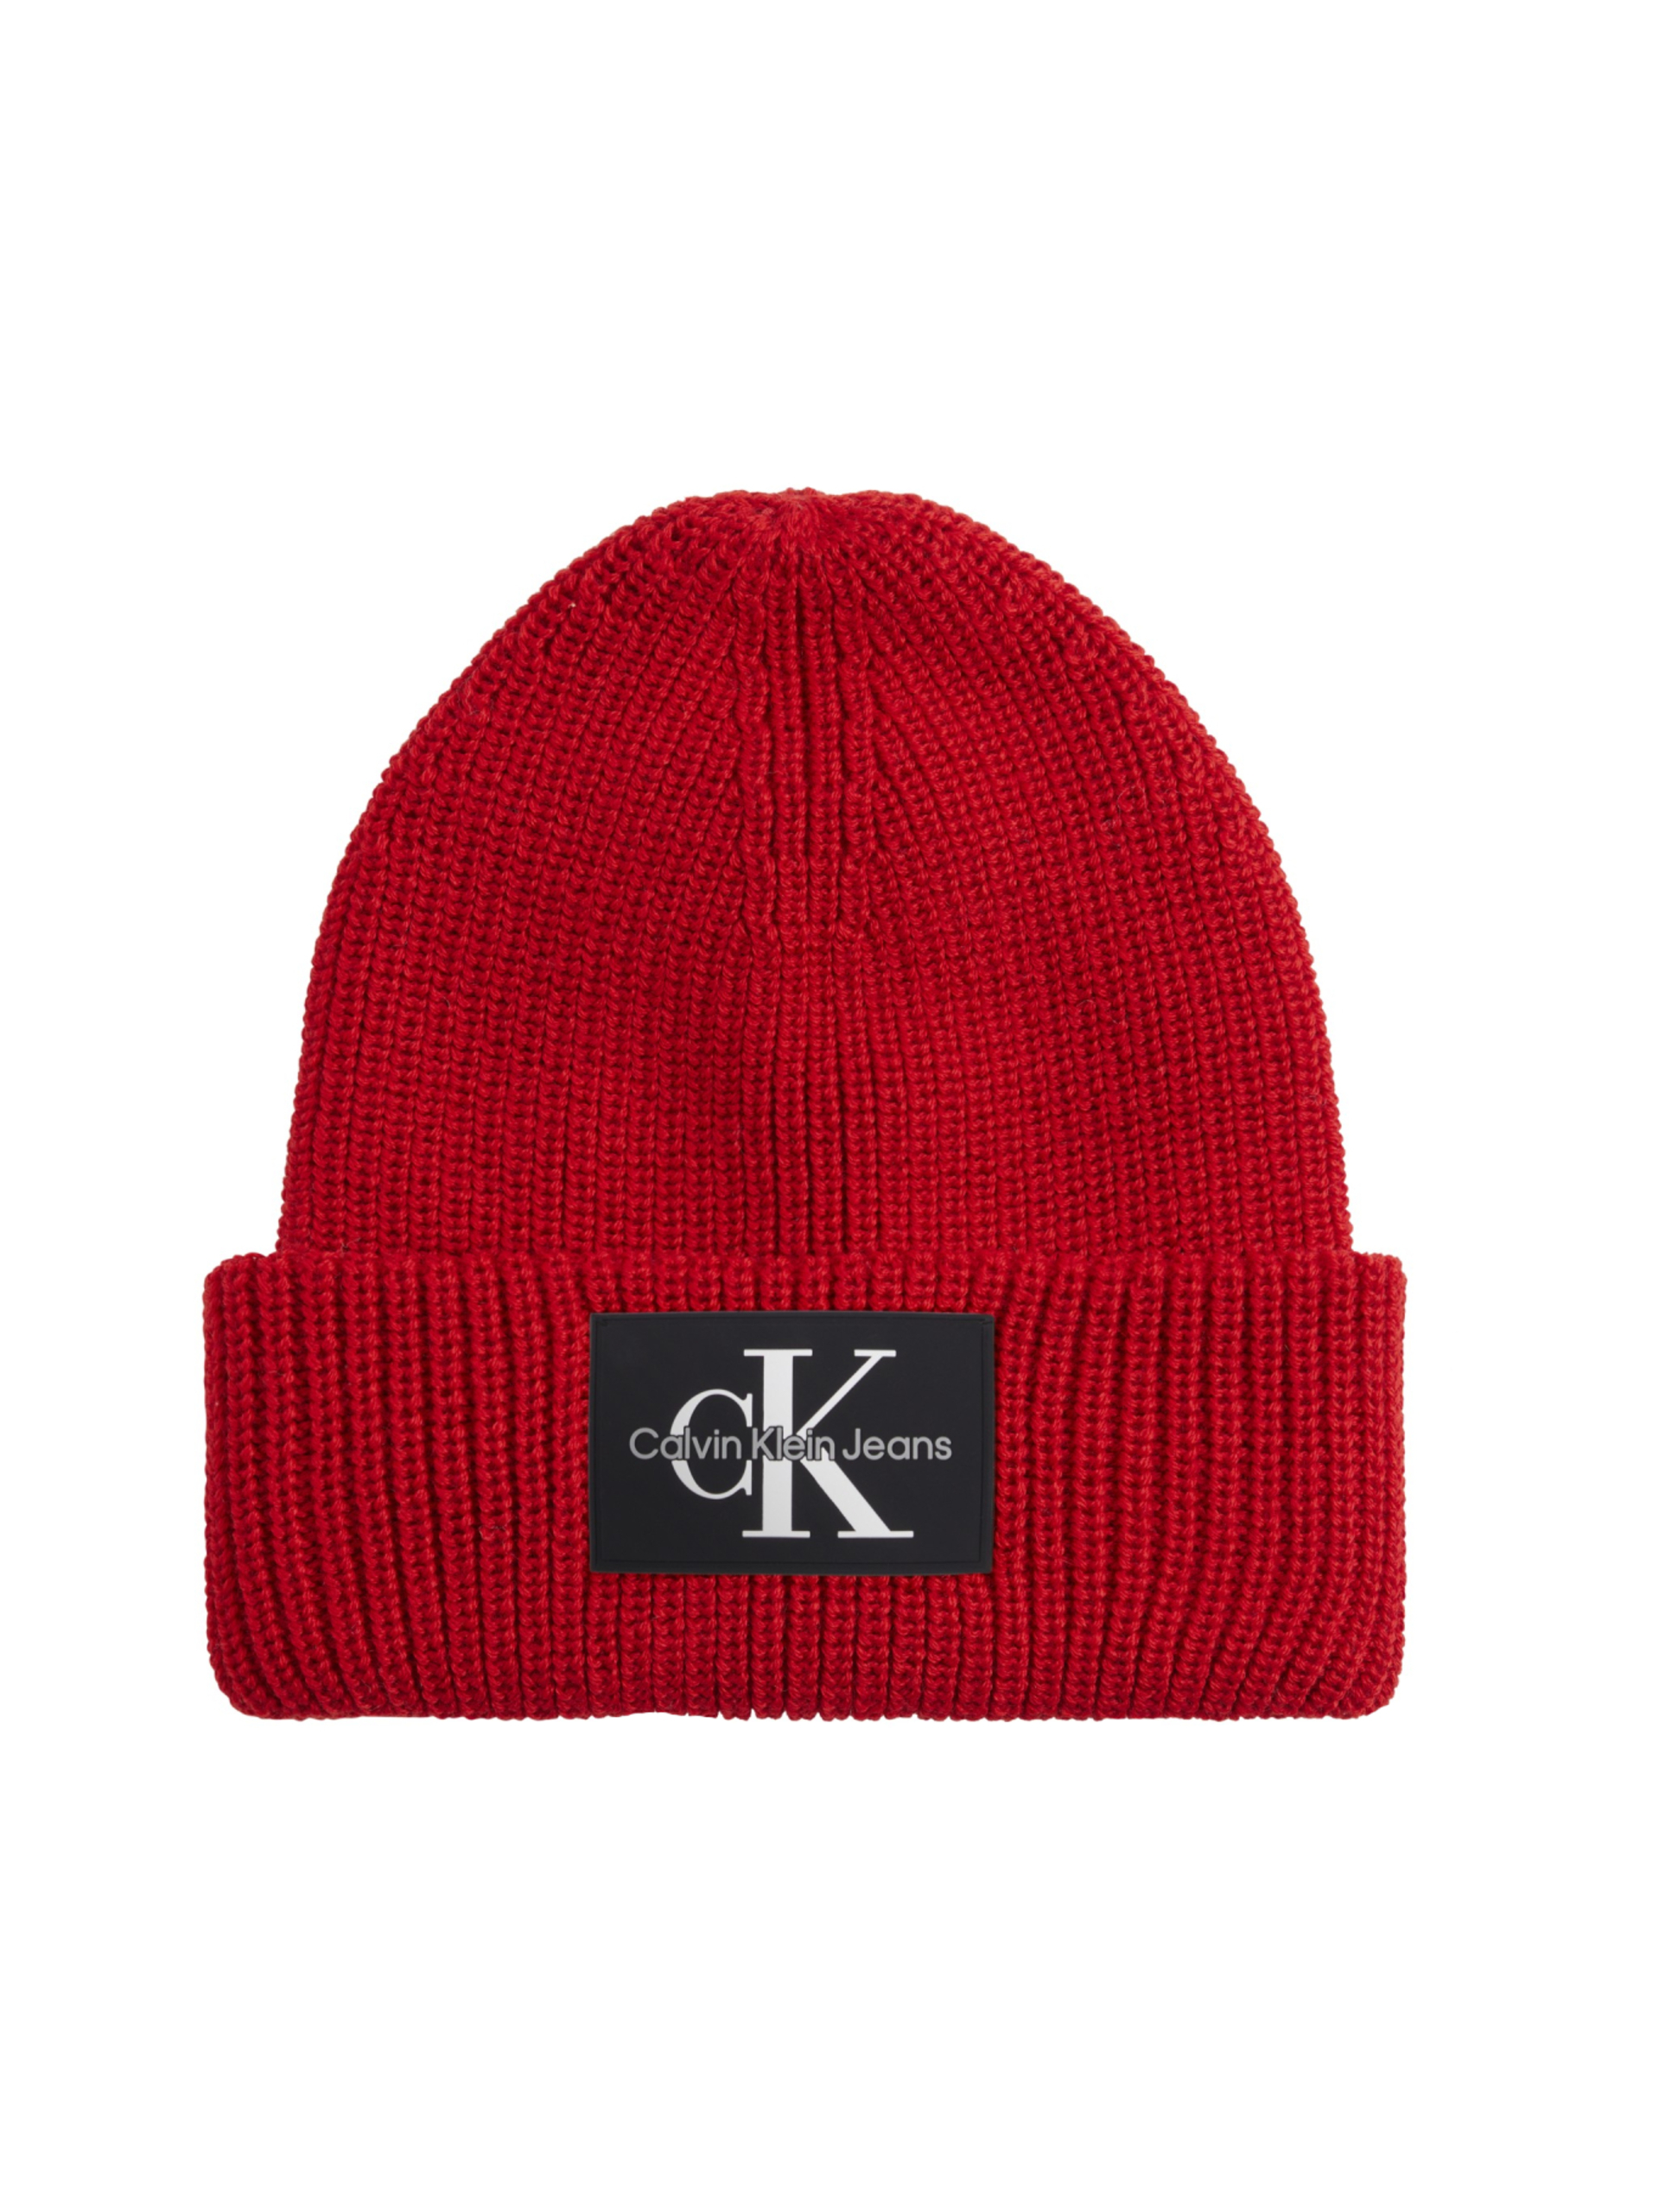 Calvin Klein dámská červená čepice - OS (XL6)